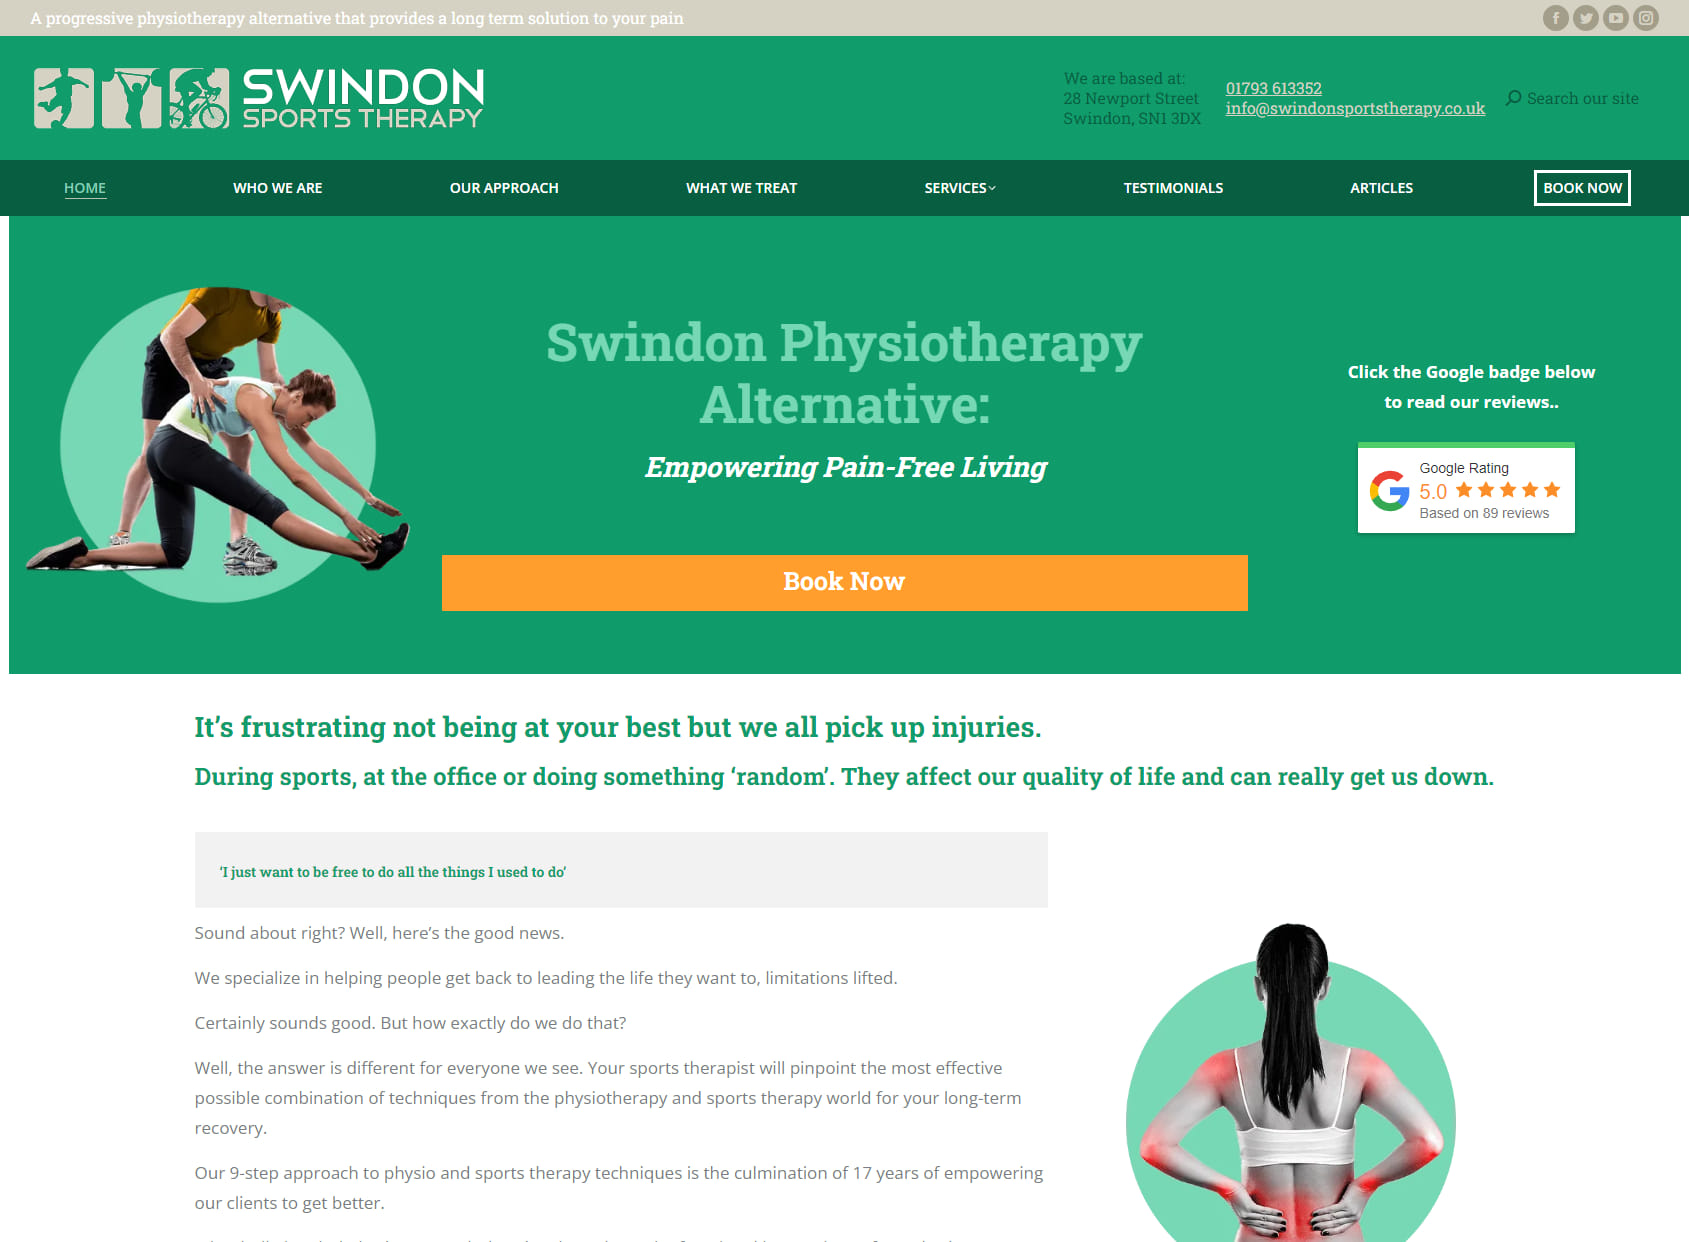 Swindon Sports Therapy